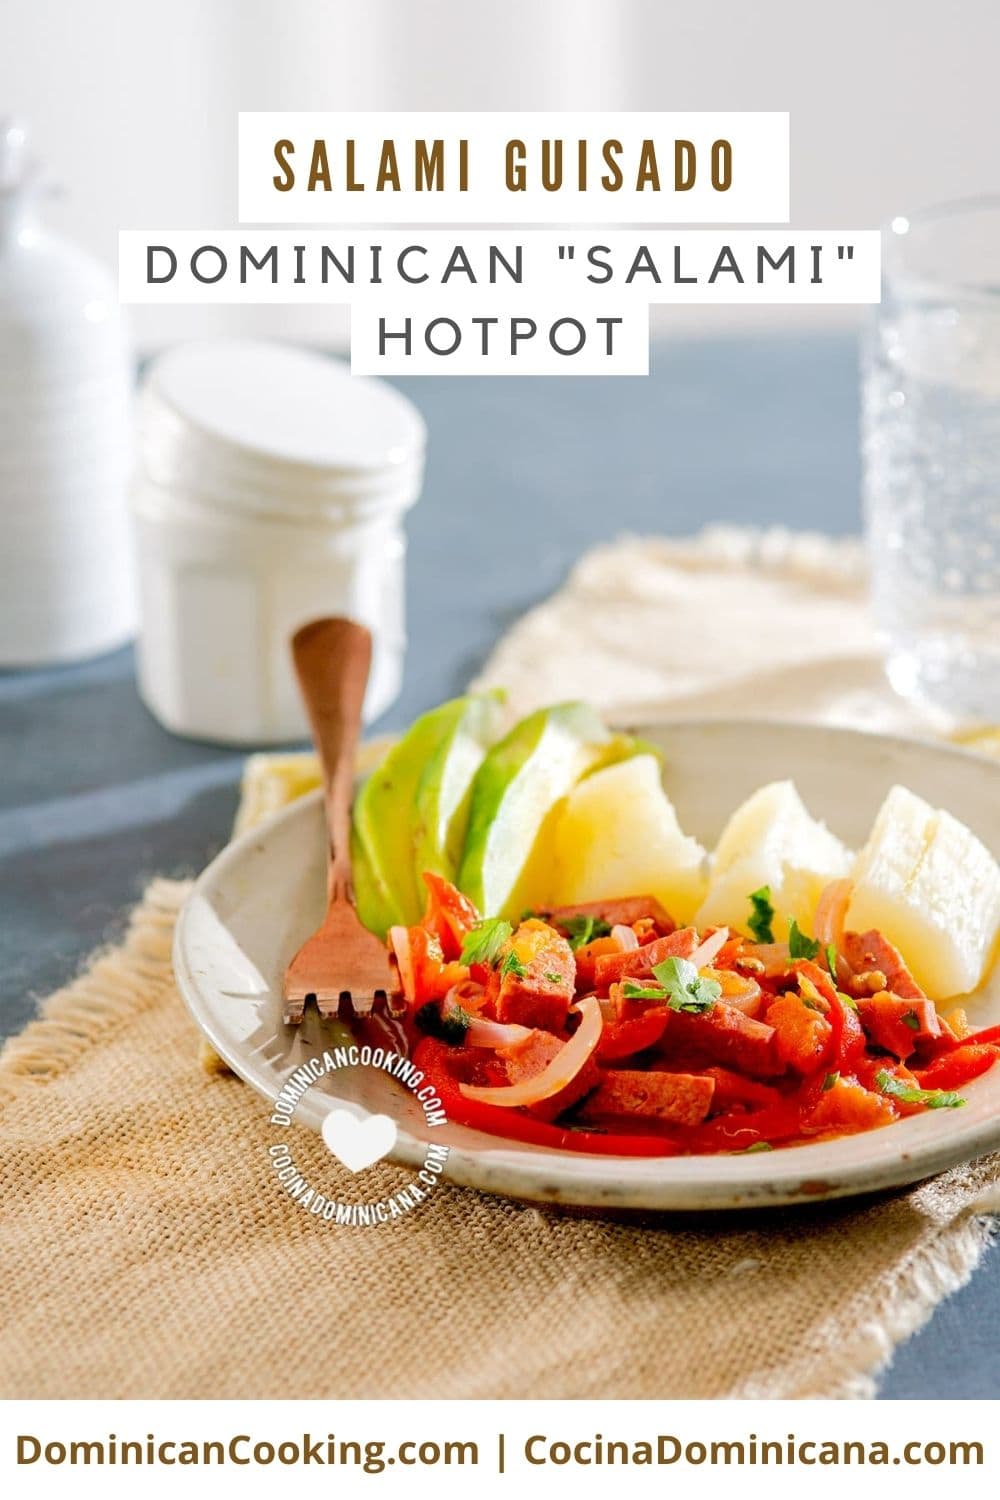 Salami guisado (Dominican salami hotpot) recipe.